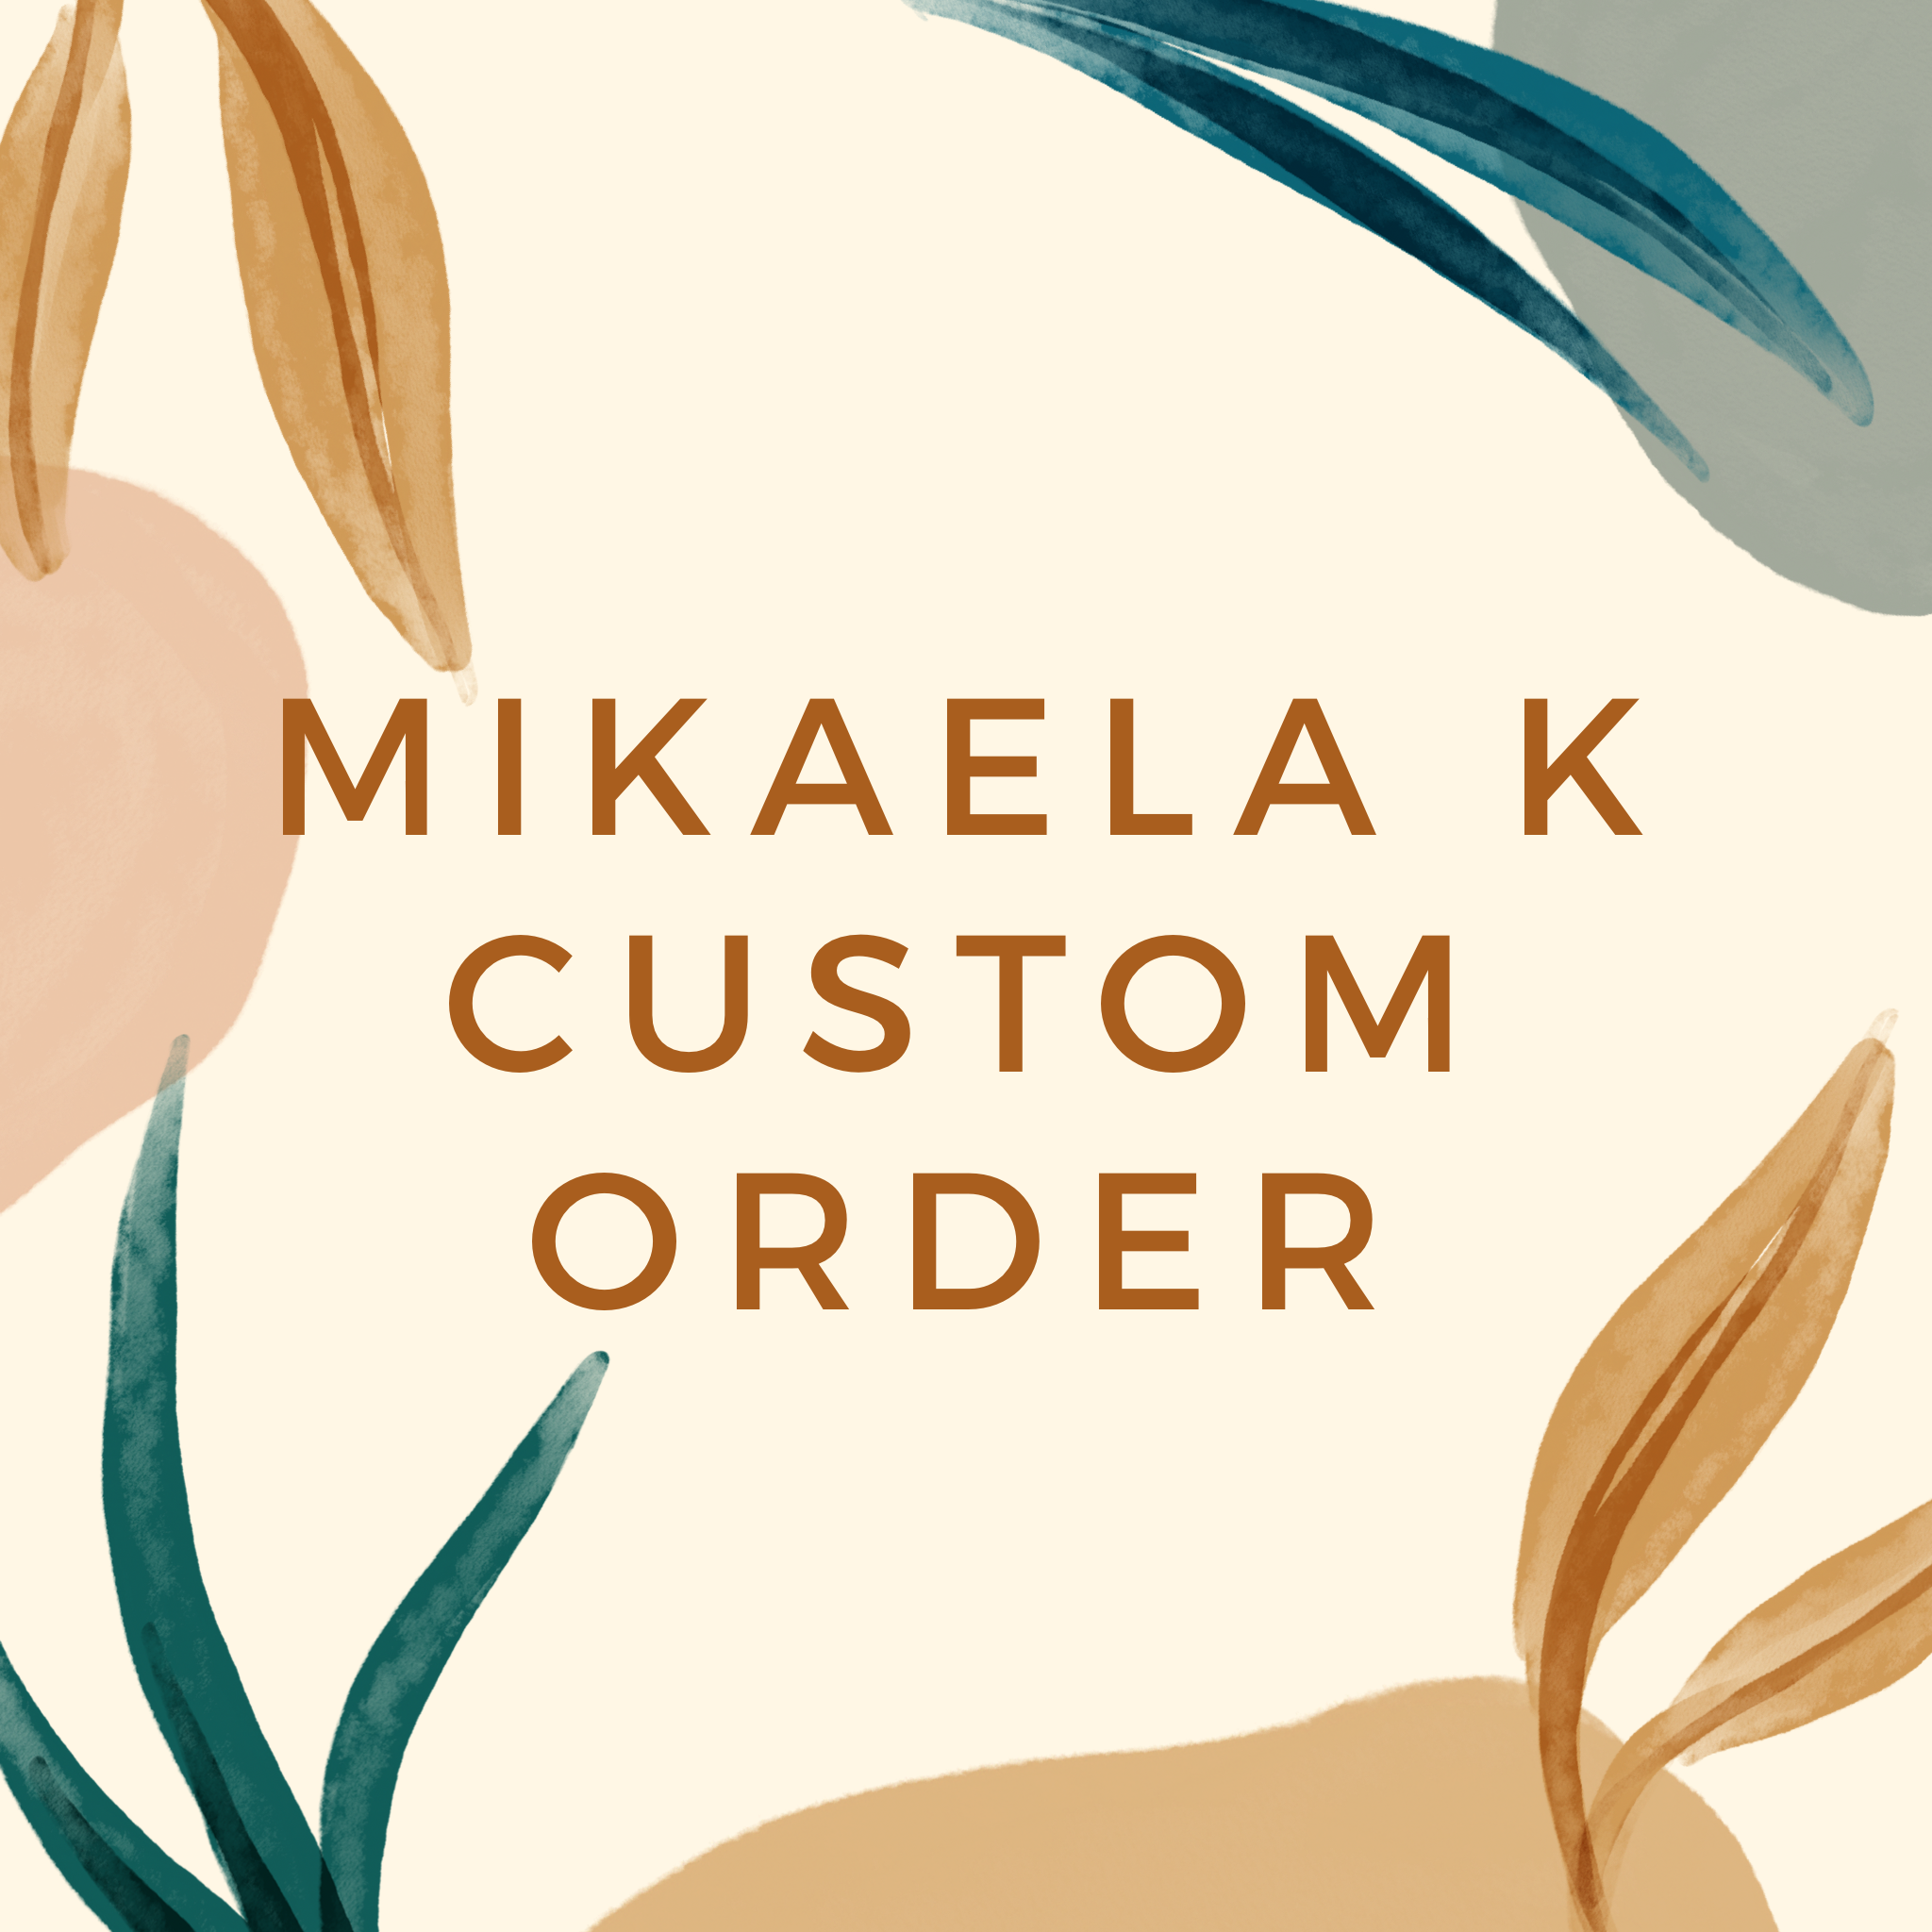 Mikaela K Custom Order